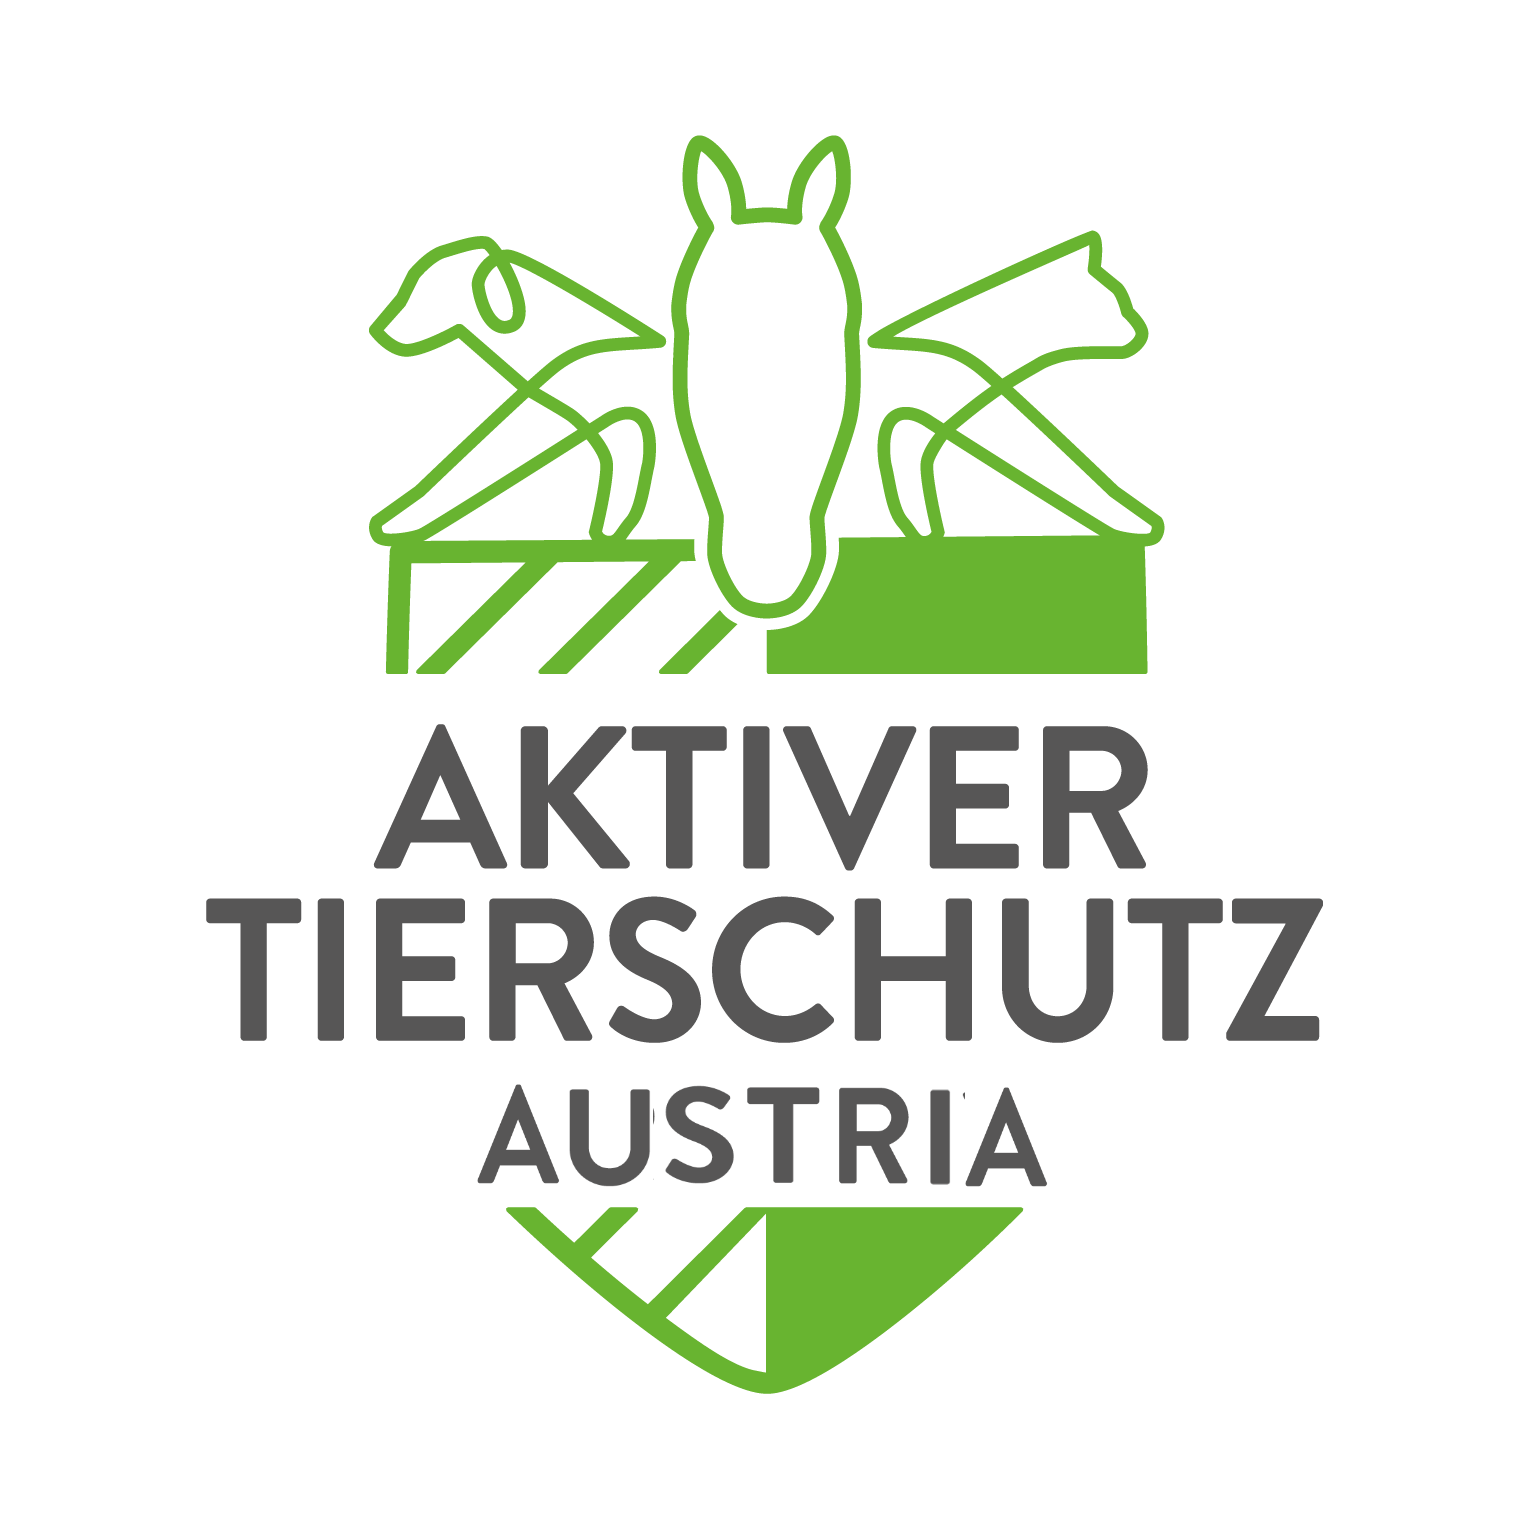 Aktiver Tierschutz Austria - Arche Noah Logo